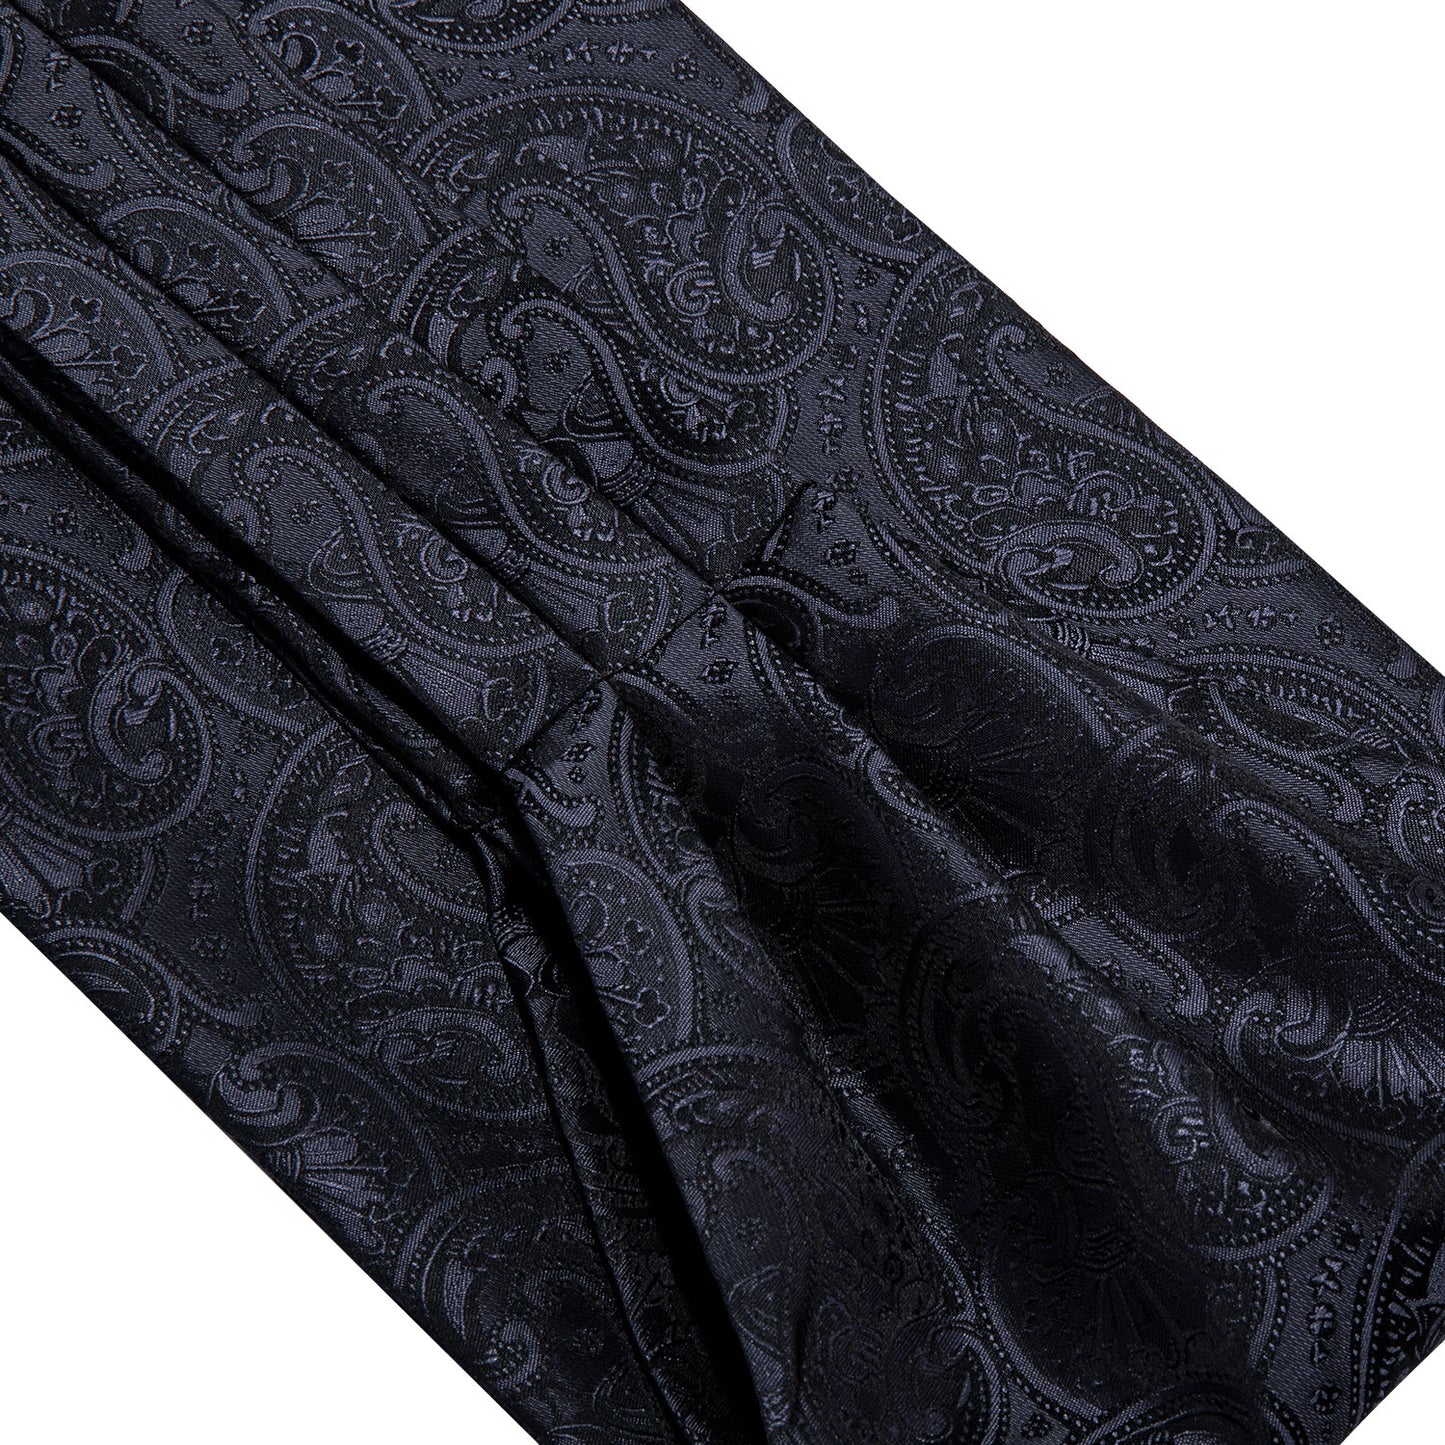 Victorian Ascot Silky Floral Day Cravat Set [Charcoal Paisley]